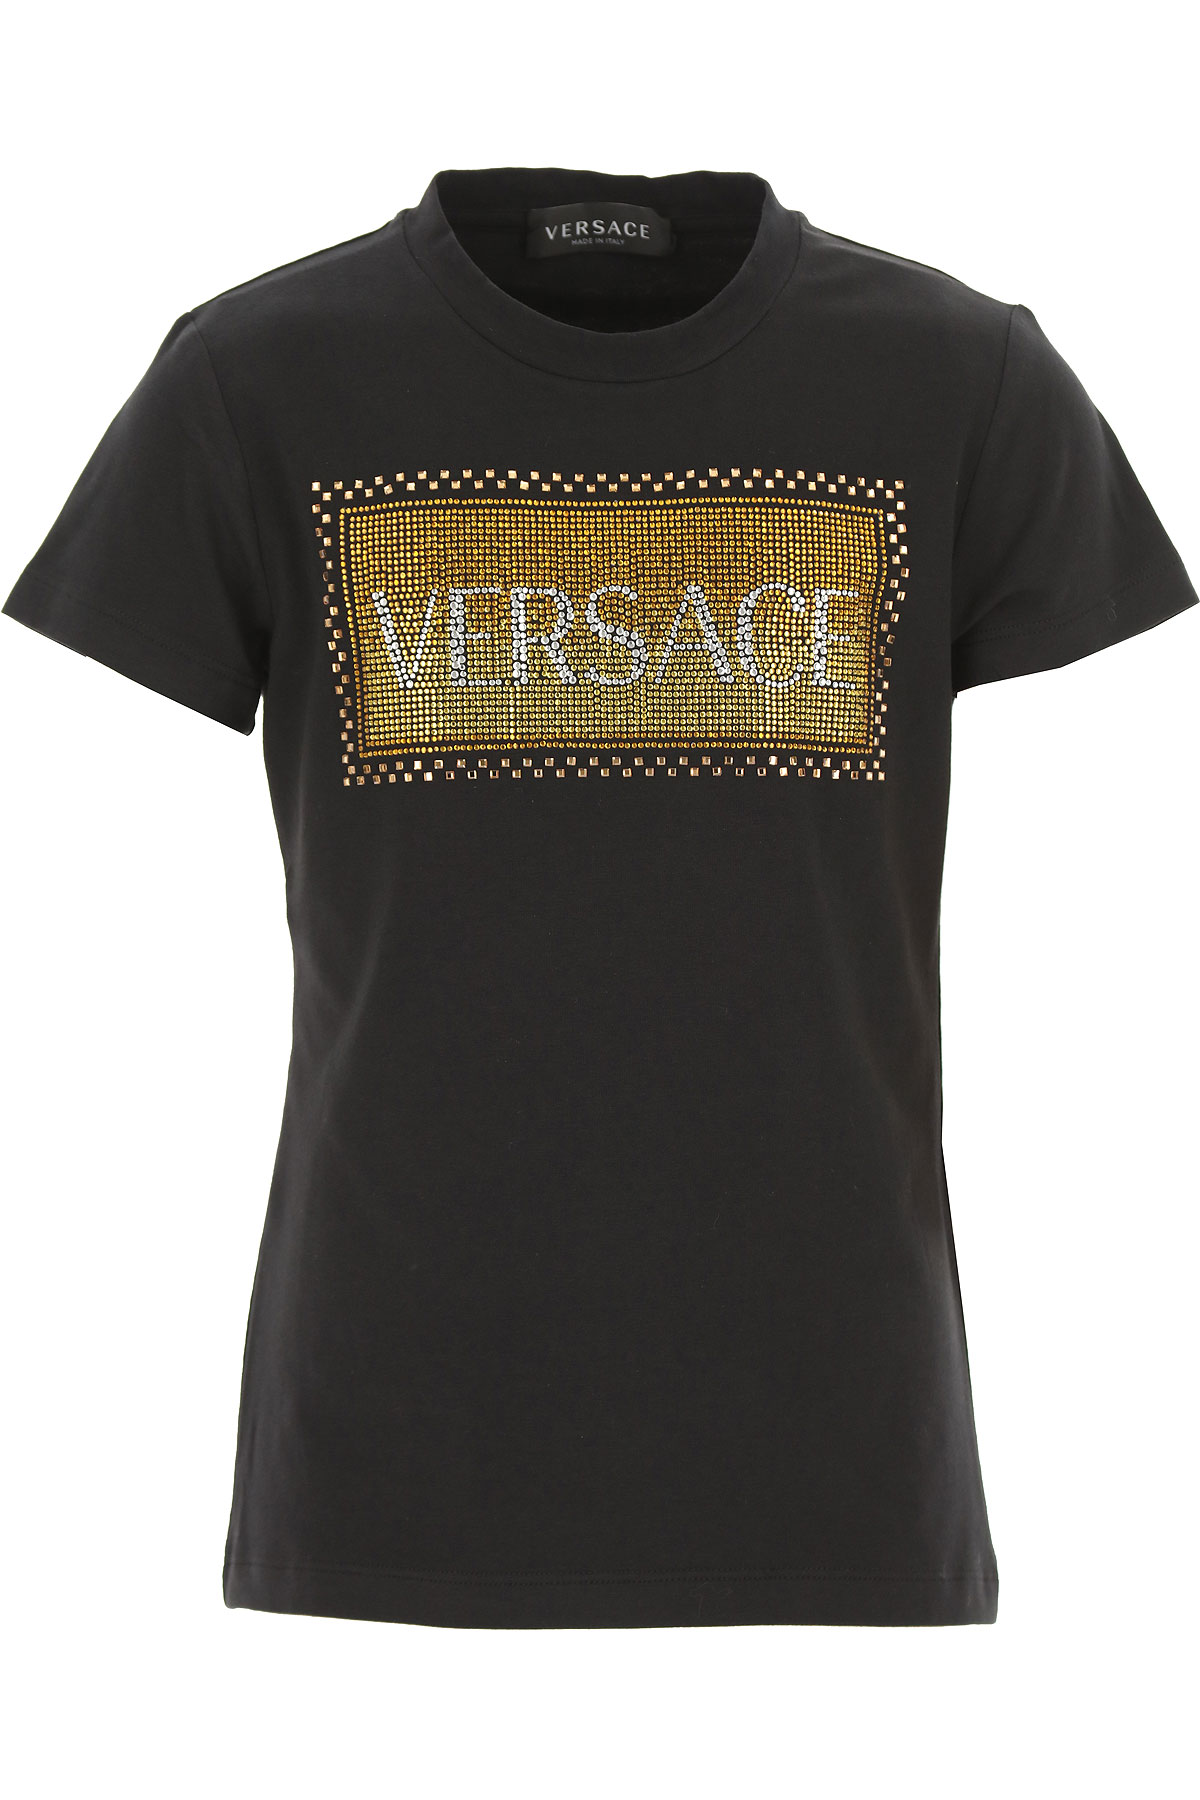 Girls Clothing Versace, Style code: yc000346-ya00019-a1008